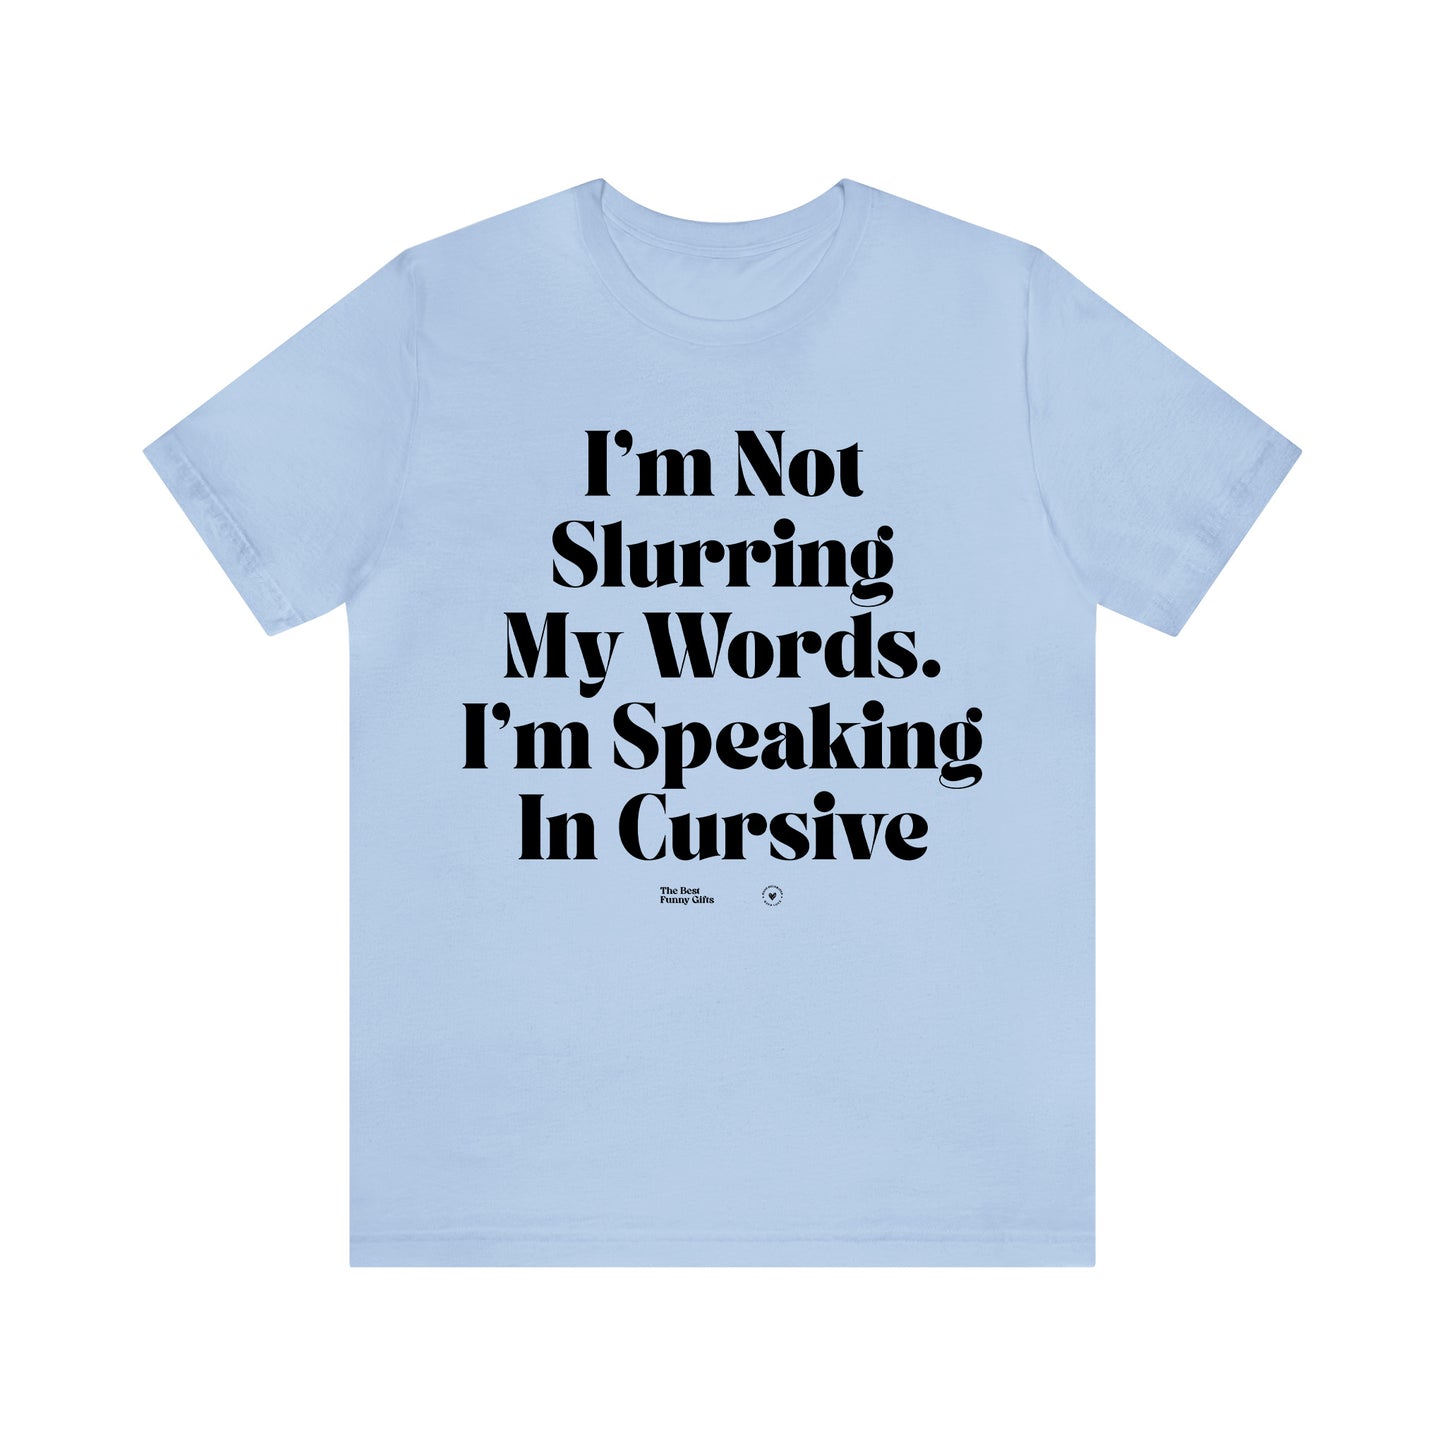 Funny Shirts for Women - I'm Not Slurring My Words. I'm Speaking Cursive - Women’s T Shirts